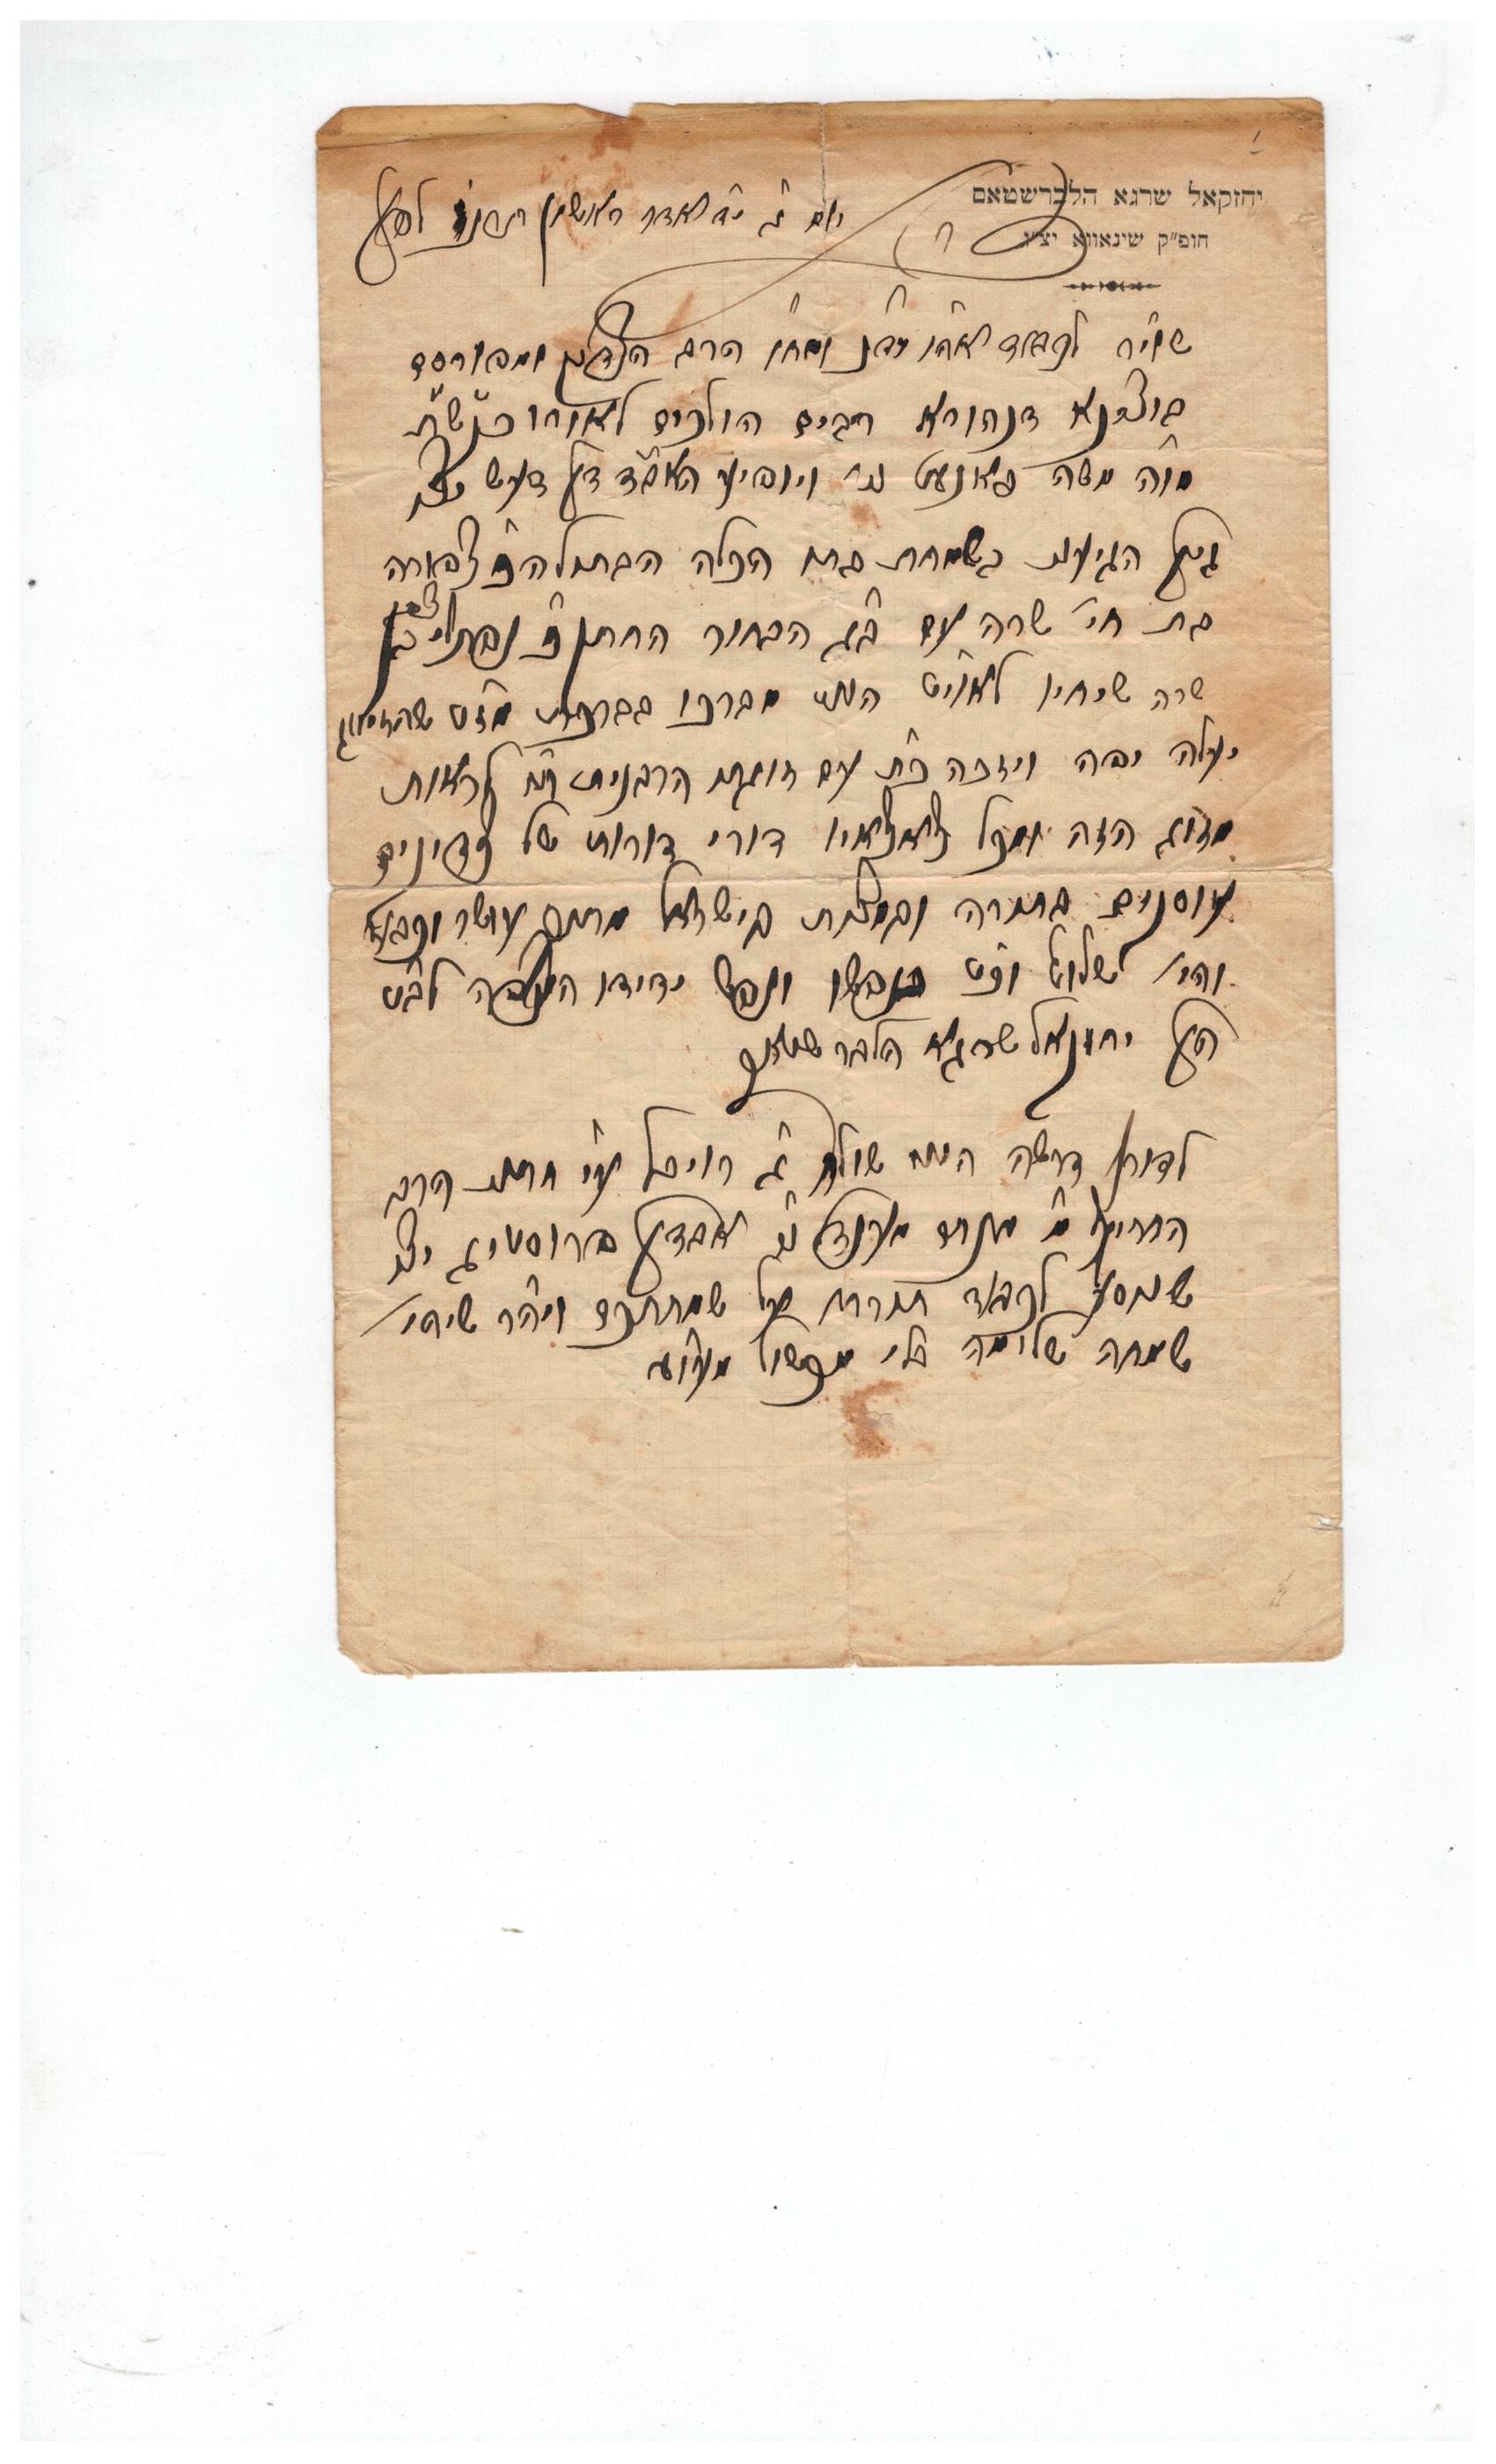 letter from the Shiniva Rav / ר' יחזקאל שרגא הלברשטאם משינאווא